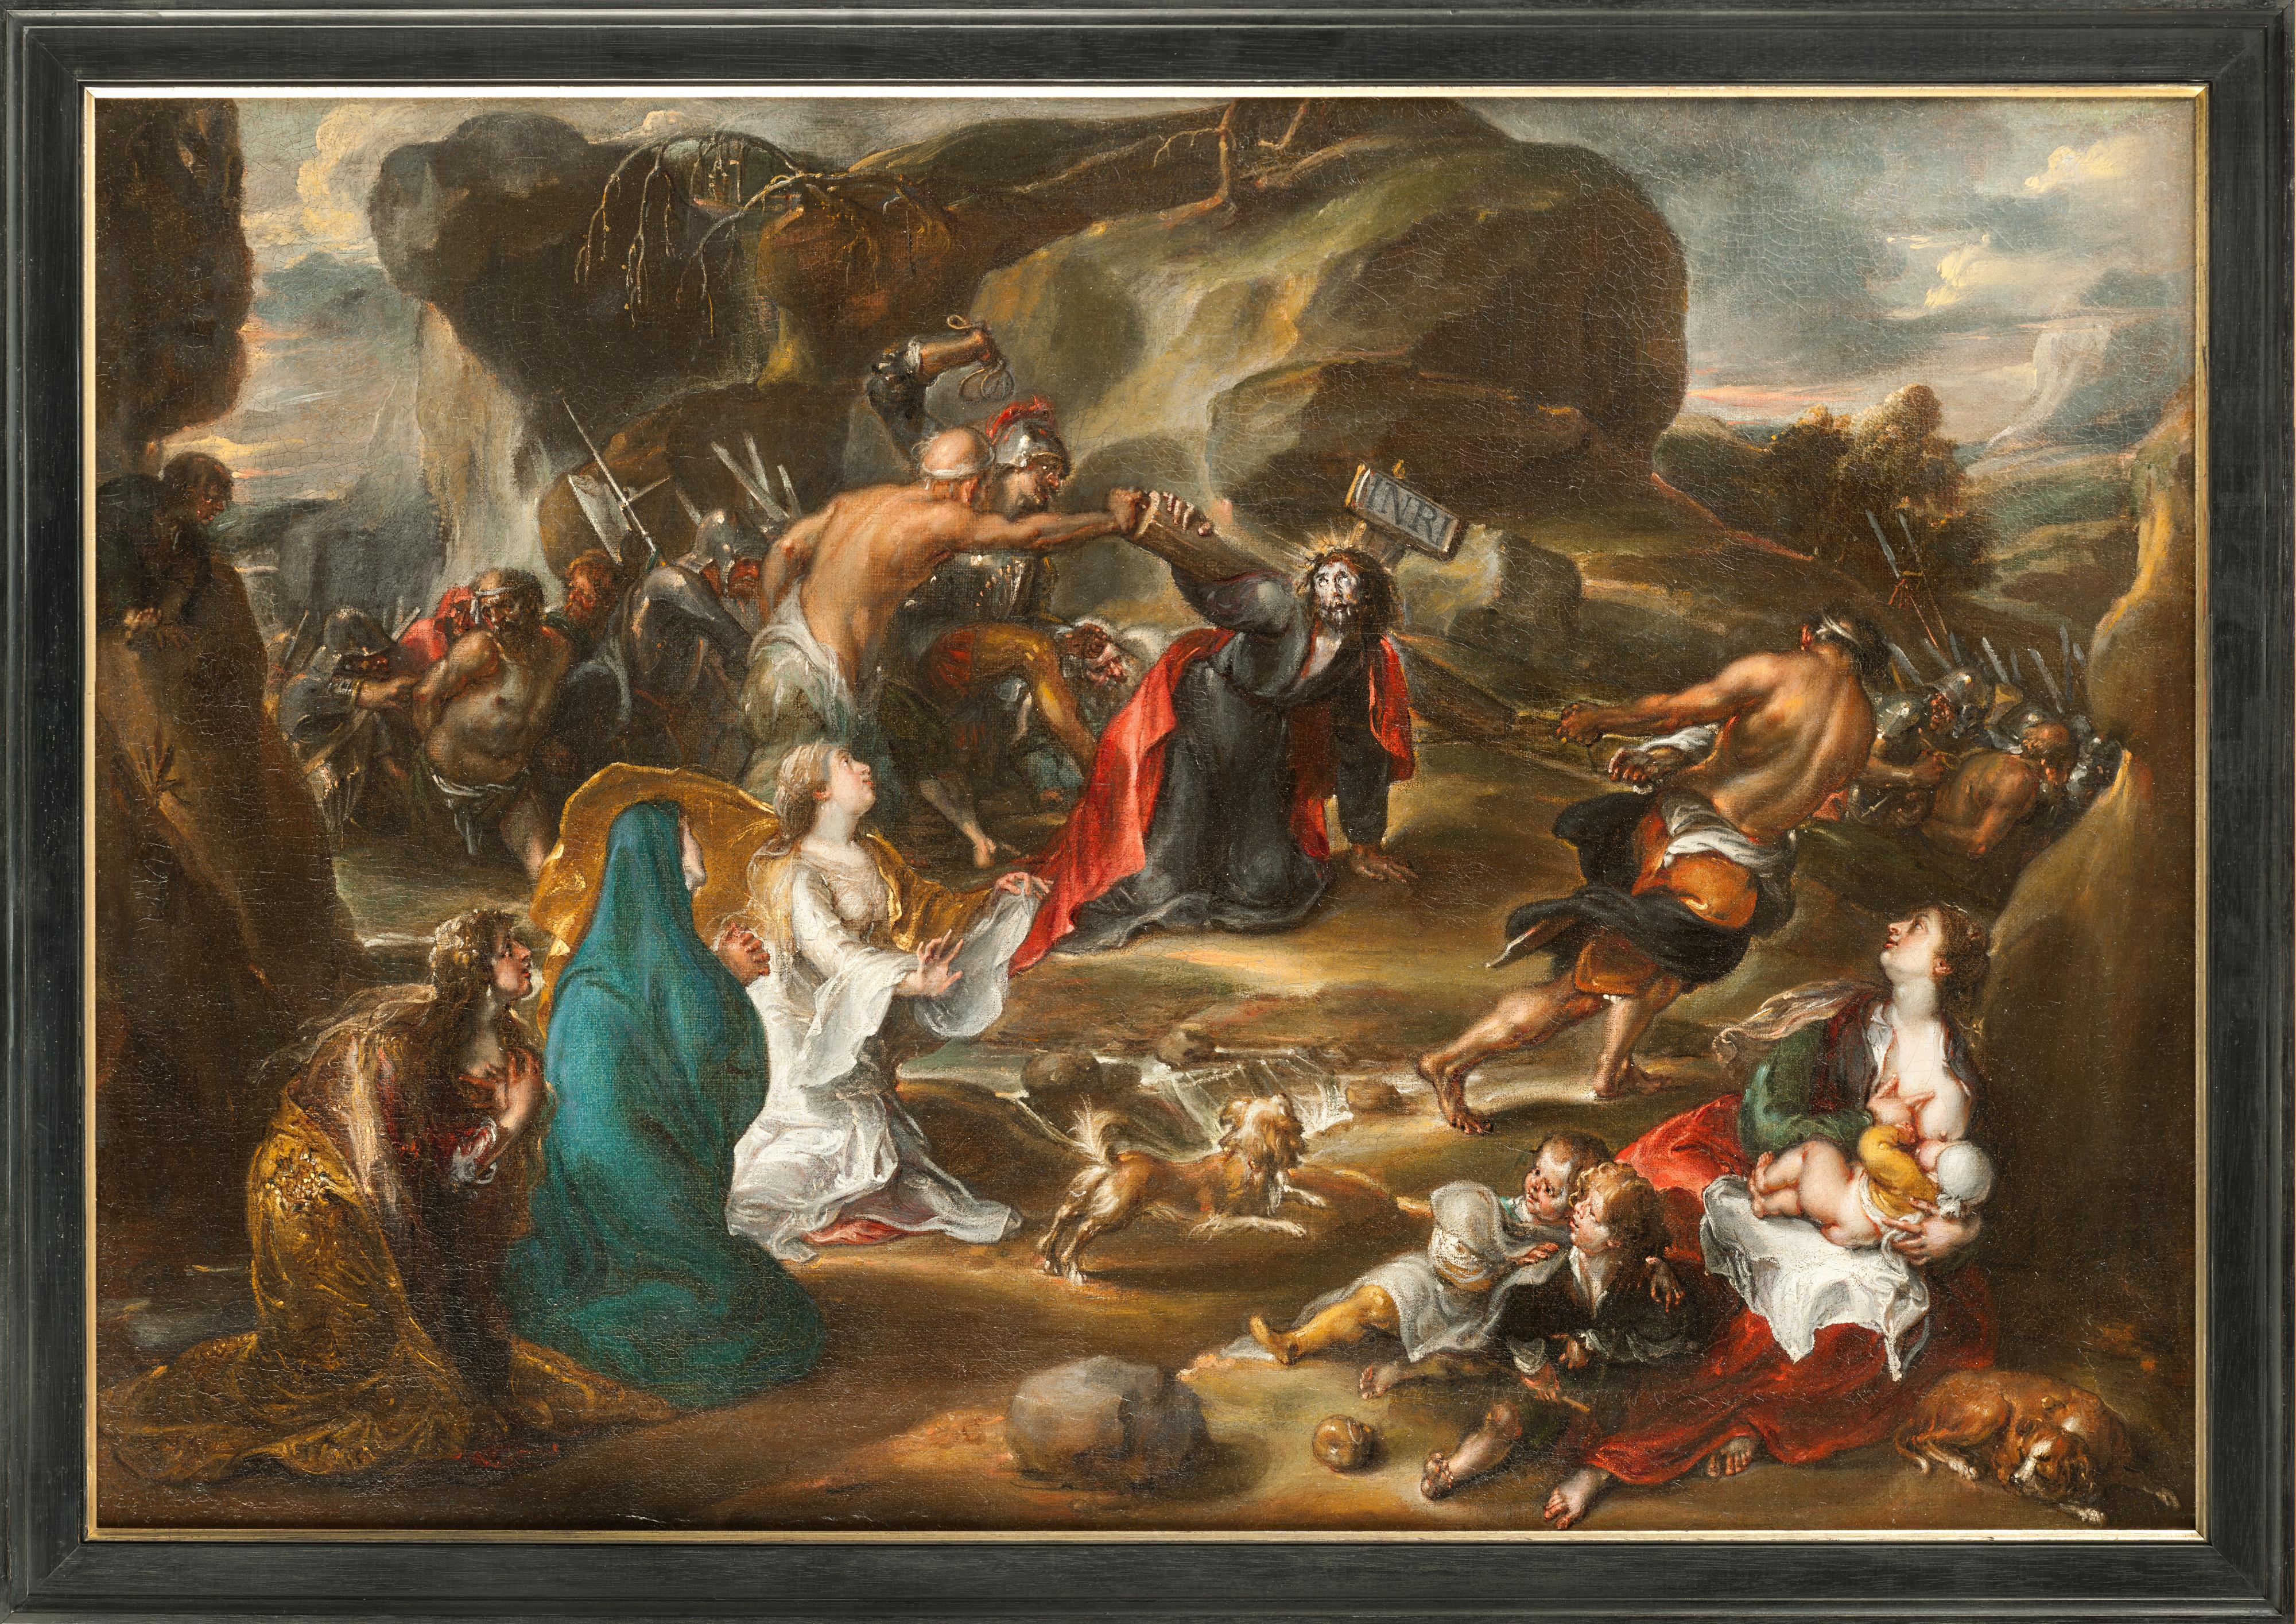 Christ Carrying the Cross, Old Master, Flemish, De Vos, Religious Scene, Rubens